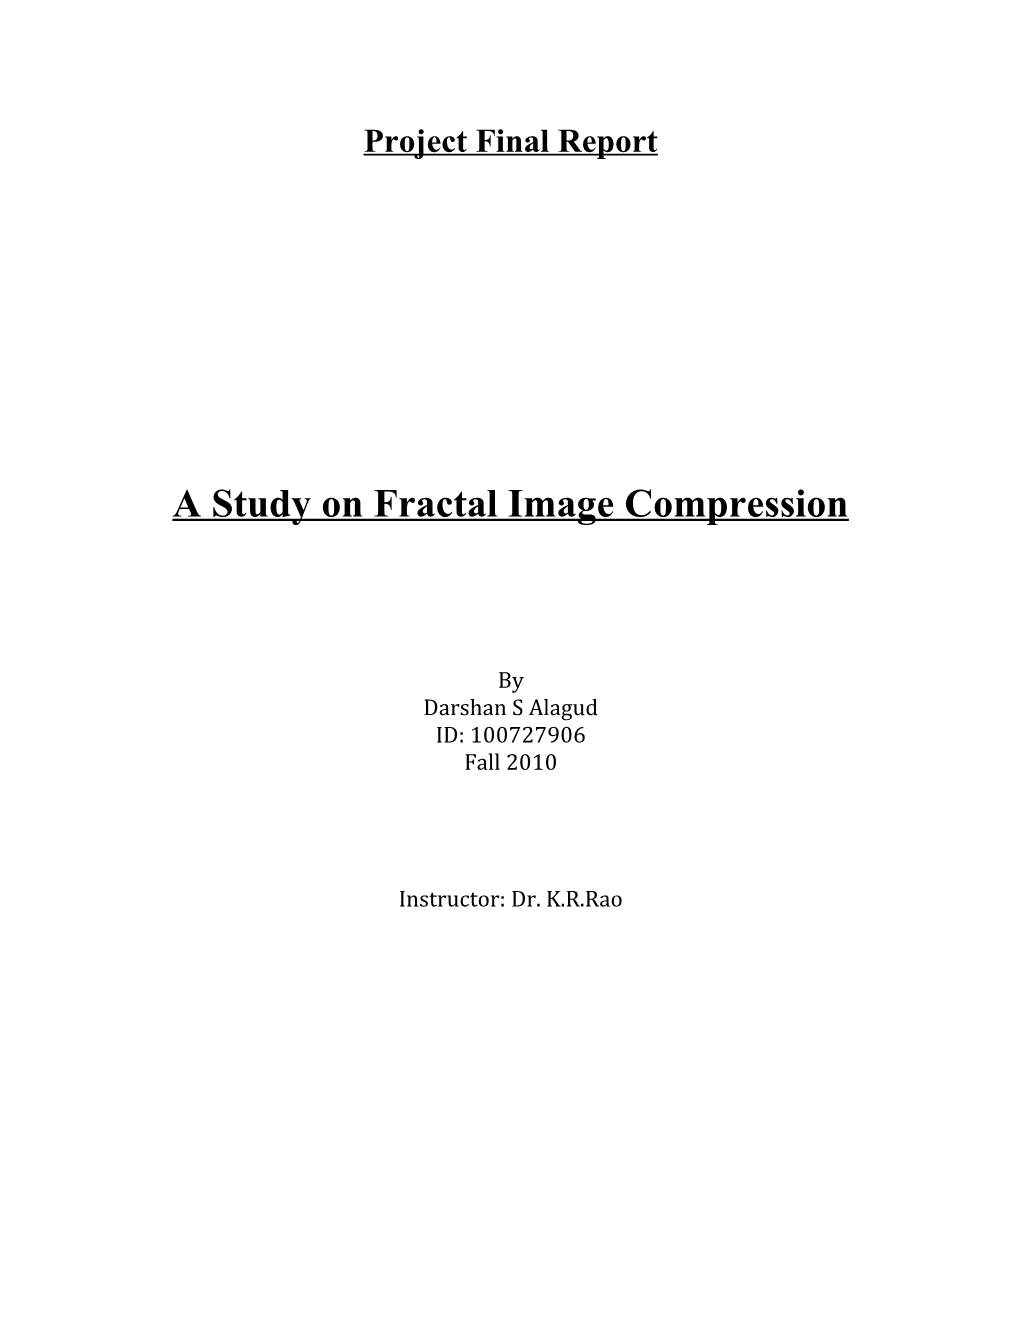 A Study on Fractal Image Compression